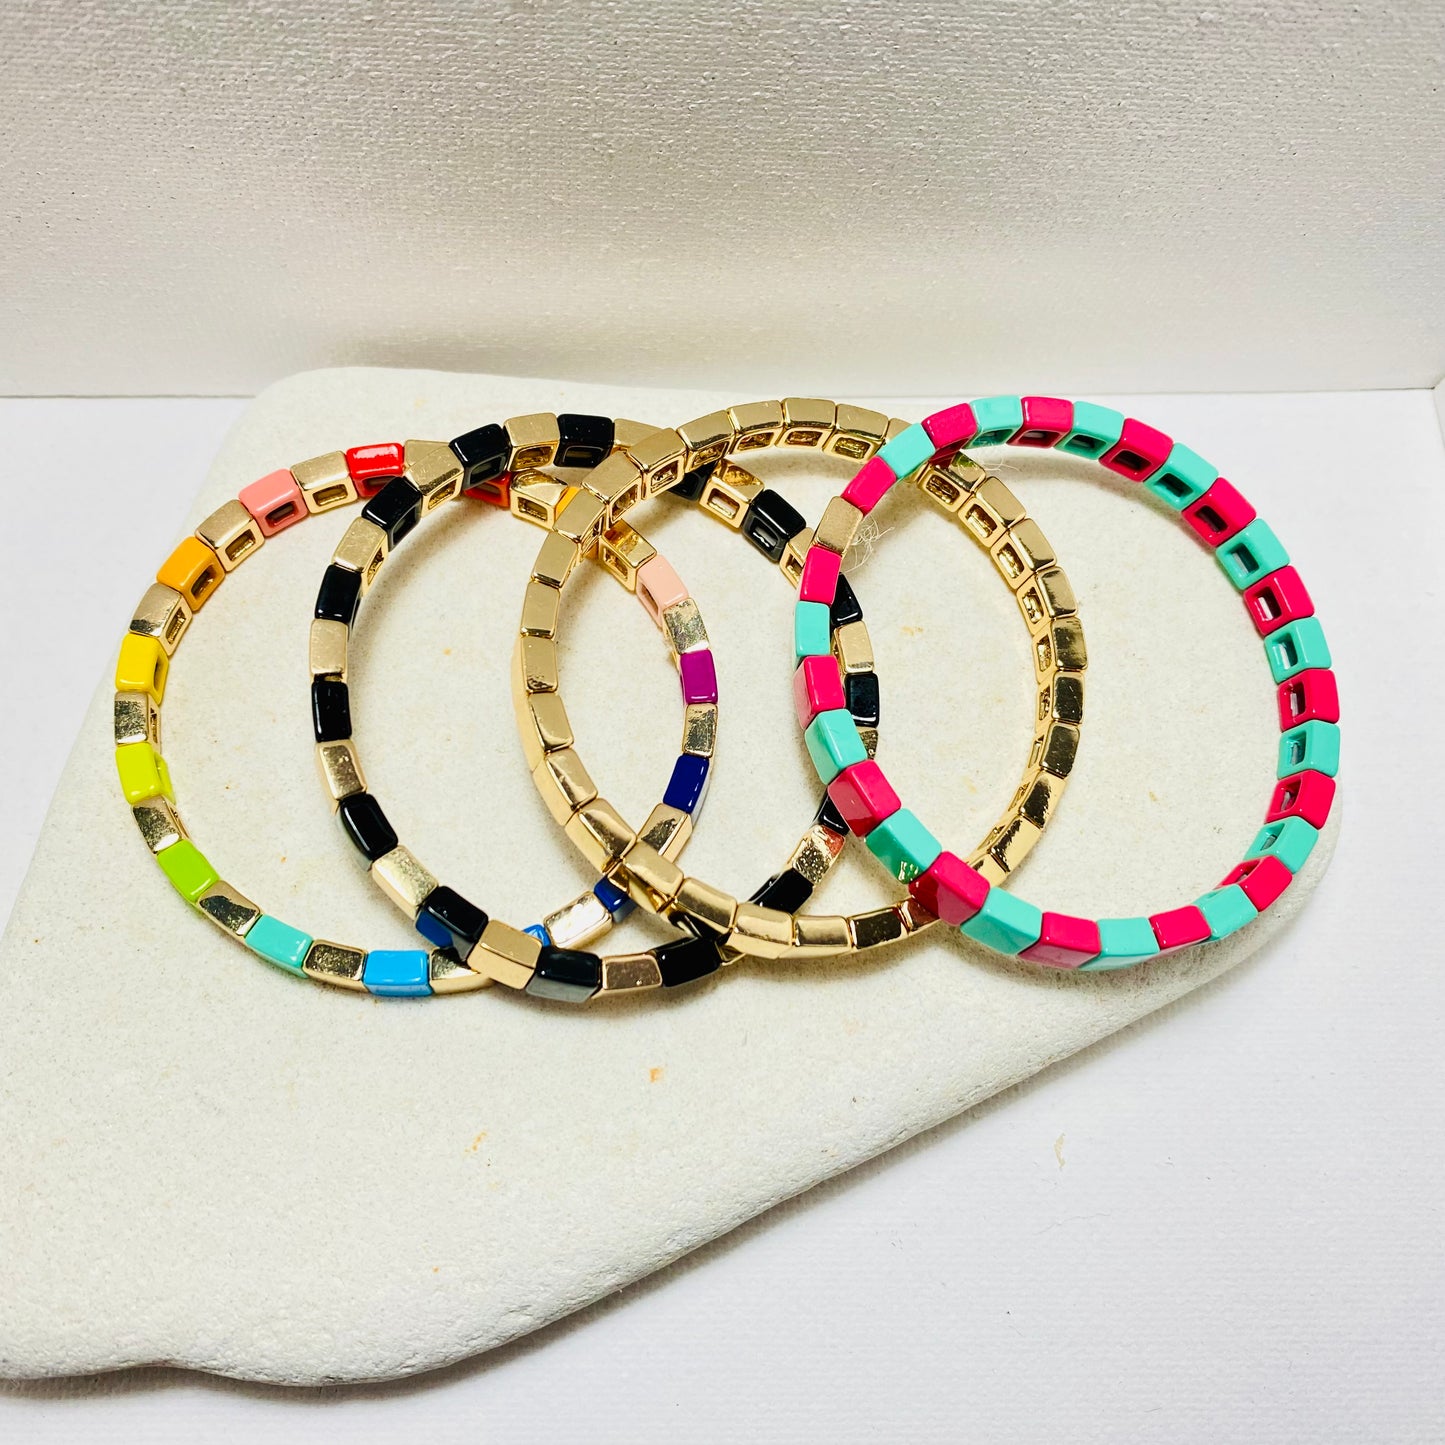 6mm dünnes Regenbogen-Gold-Emaille-Fliesenperlenarmband, Colorblock-Armbänder, Emailleperlen, trendige Tila